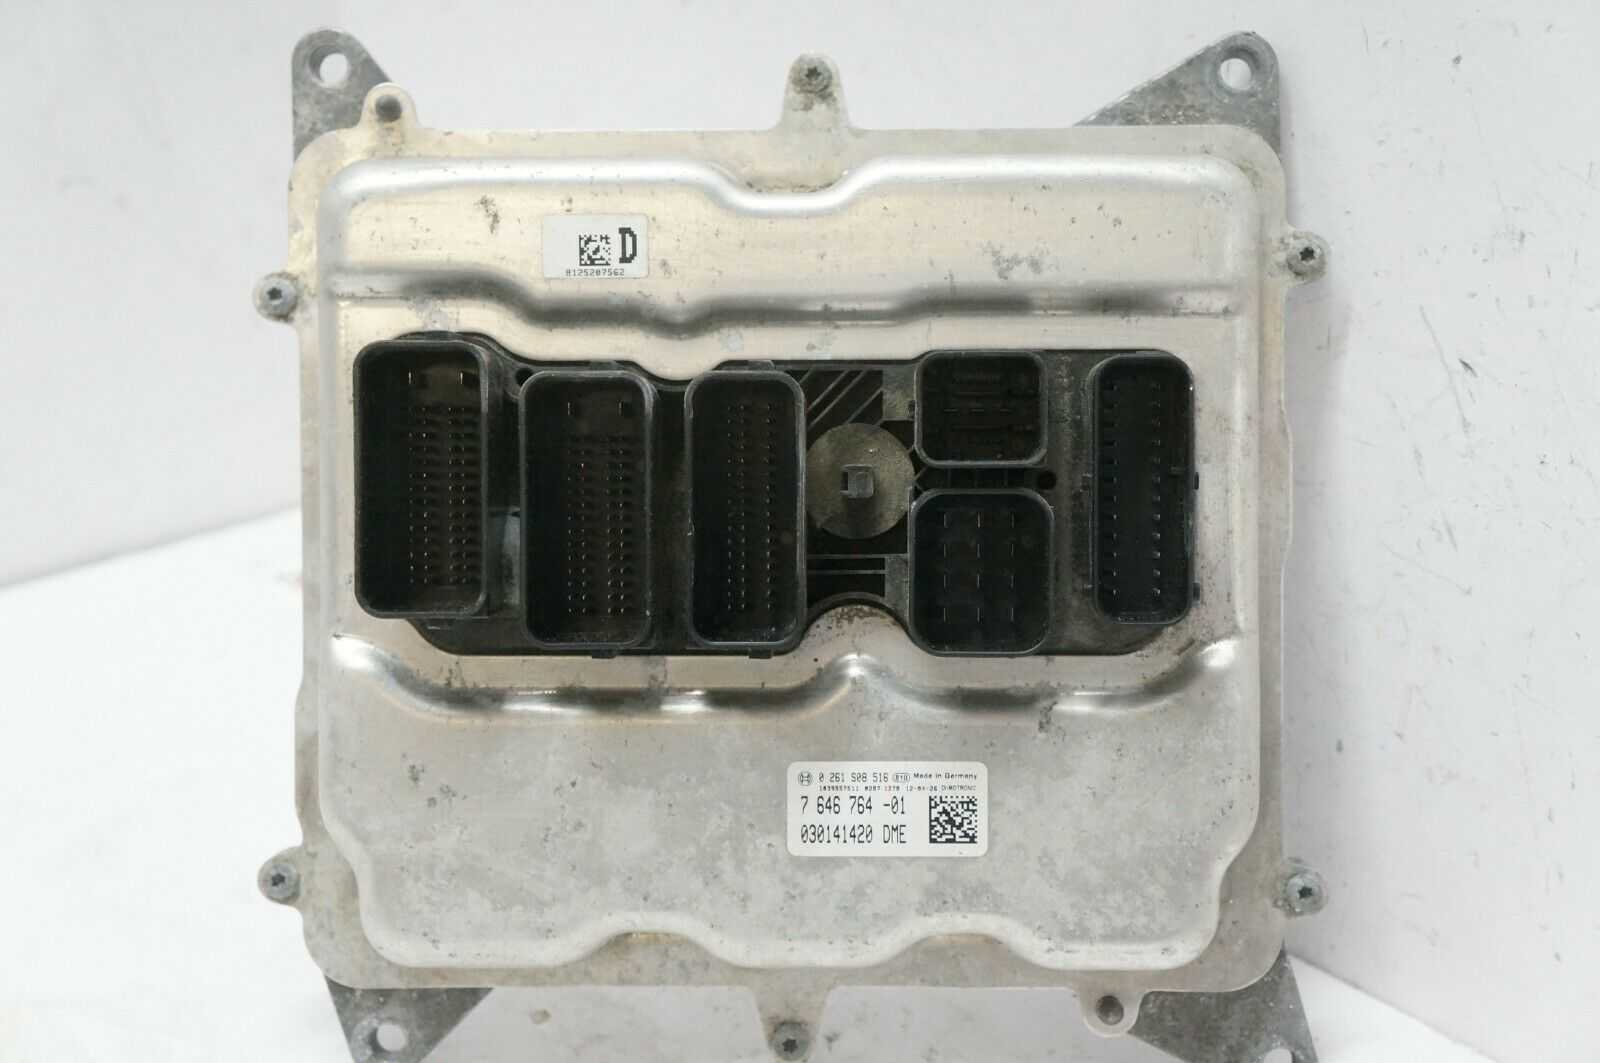 2012-2013 BMW 328i ECM ECU Computer Engine Control Module 7 646 764 -01 OEM Alshned Auto Parts